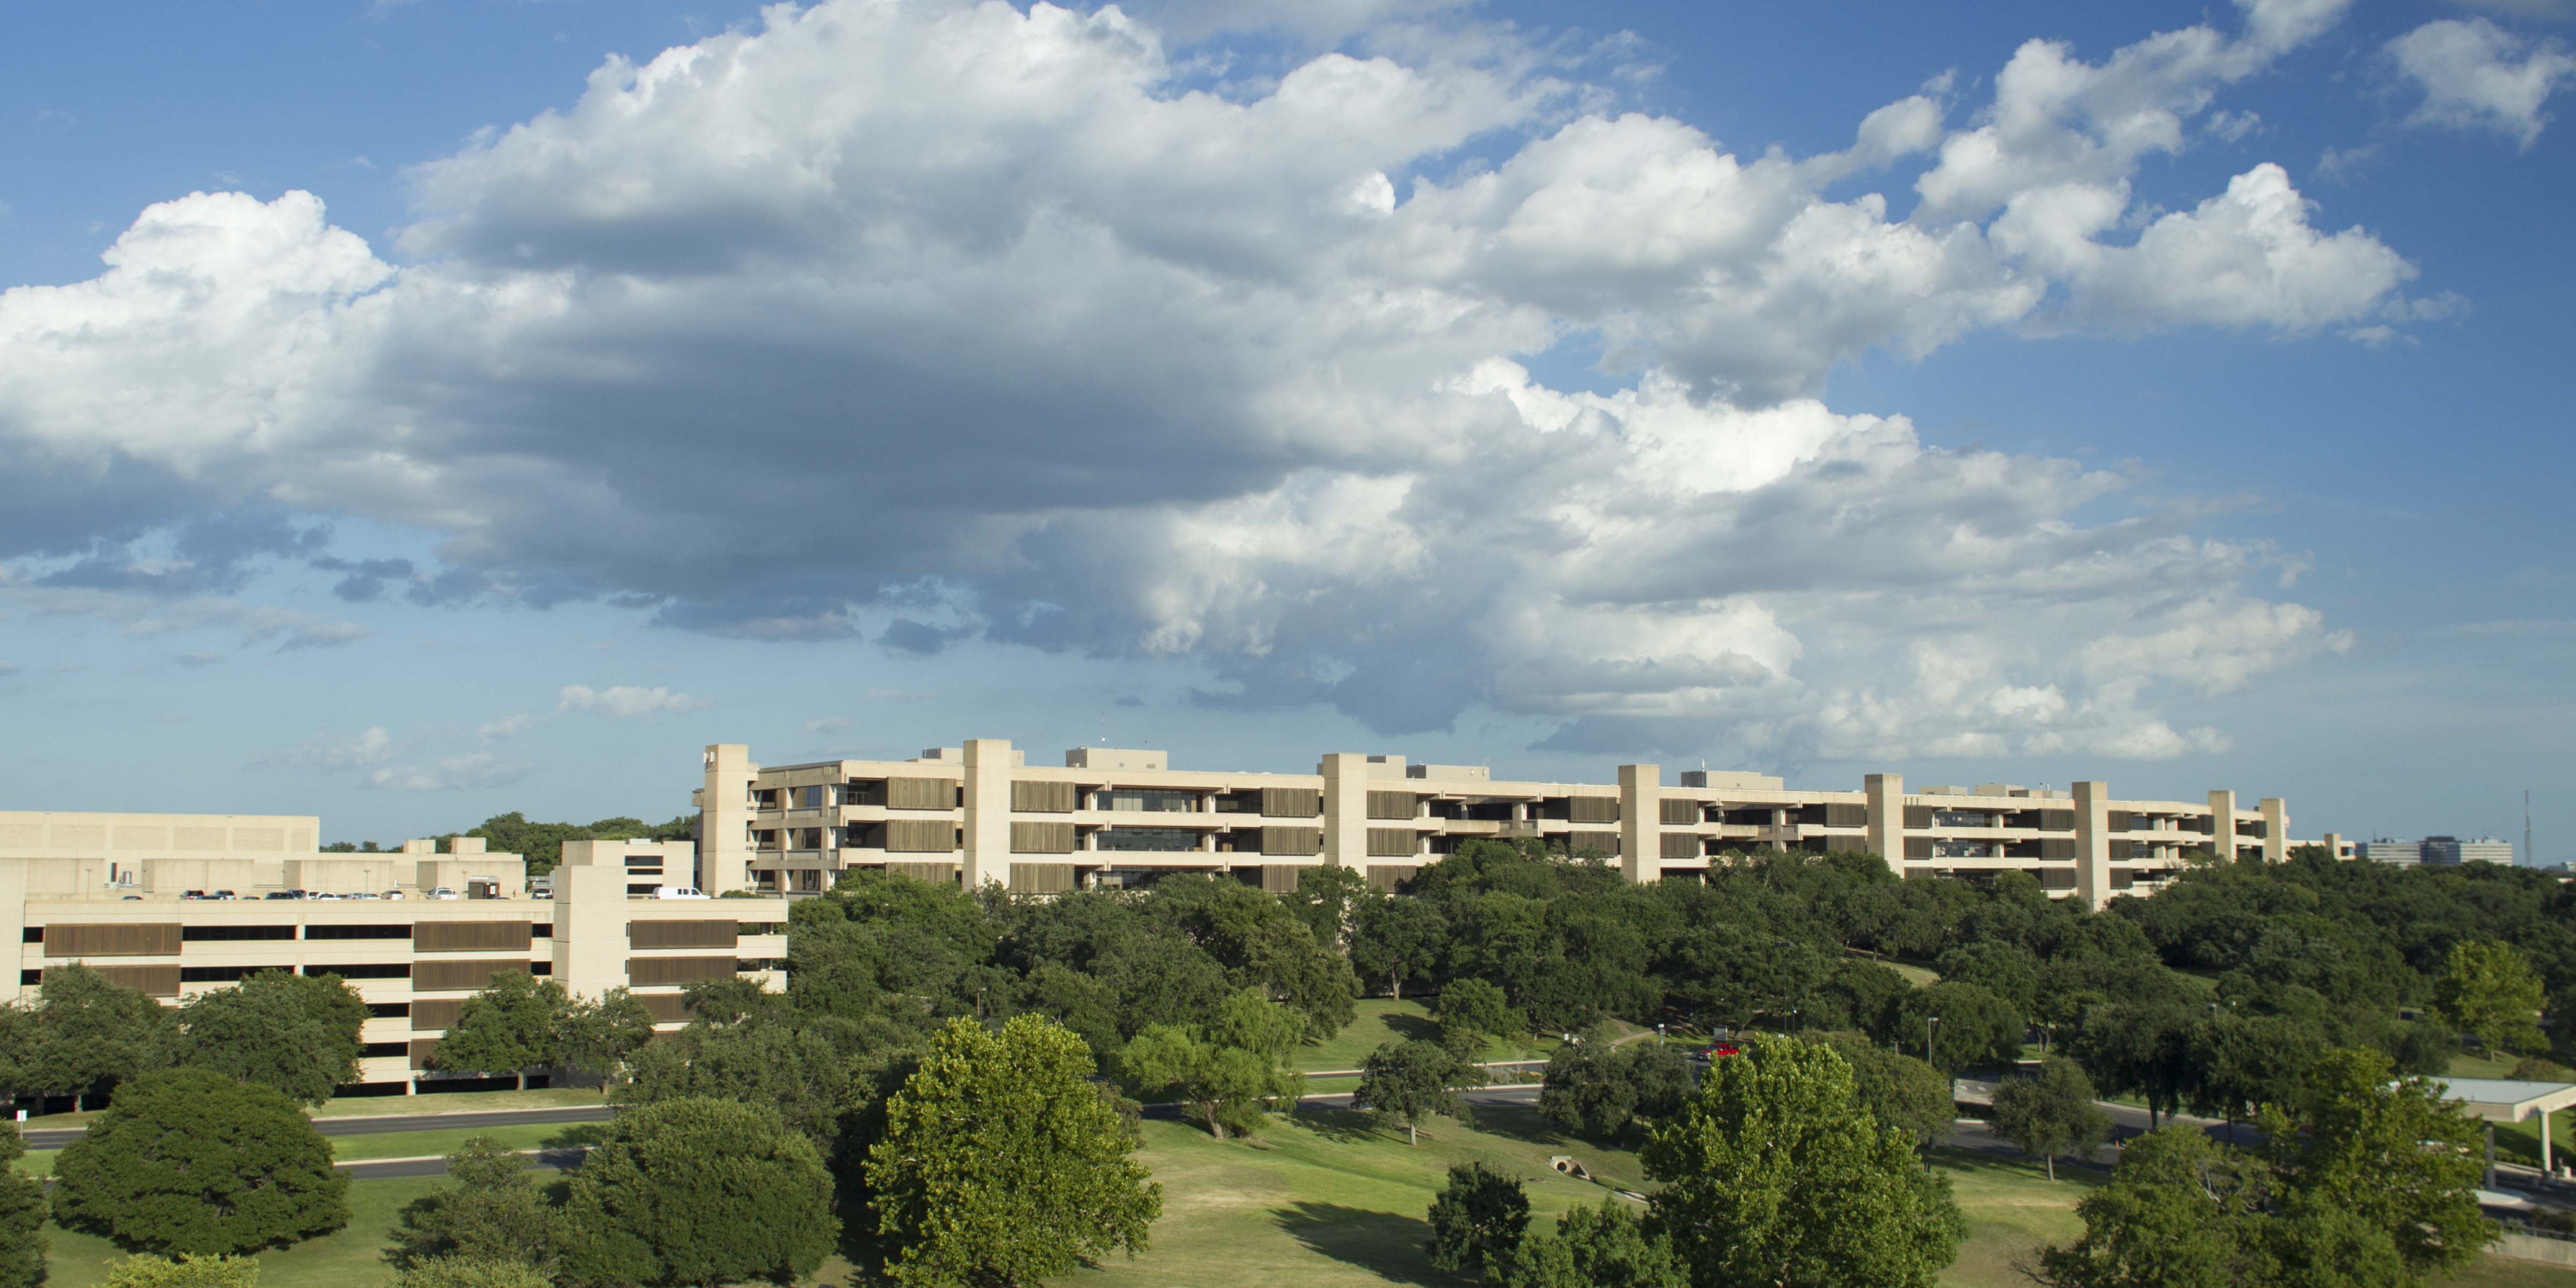 USAA Headquarters in San Antonio